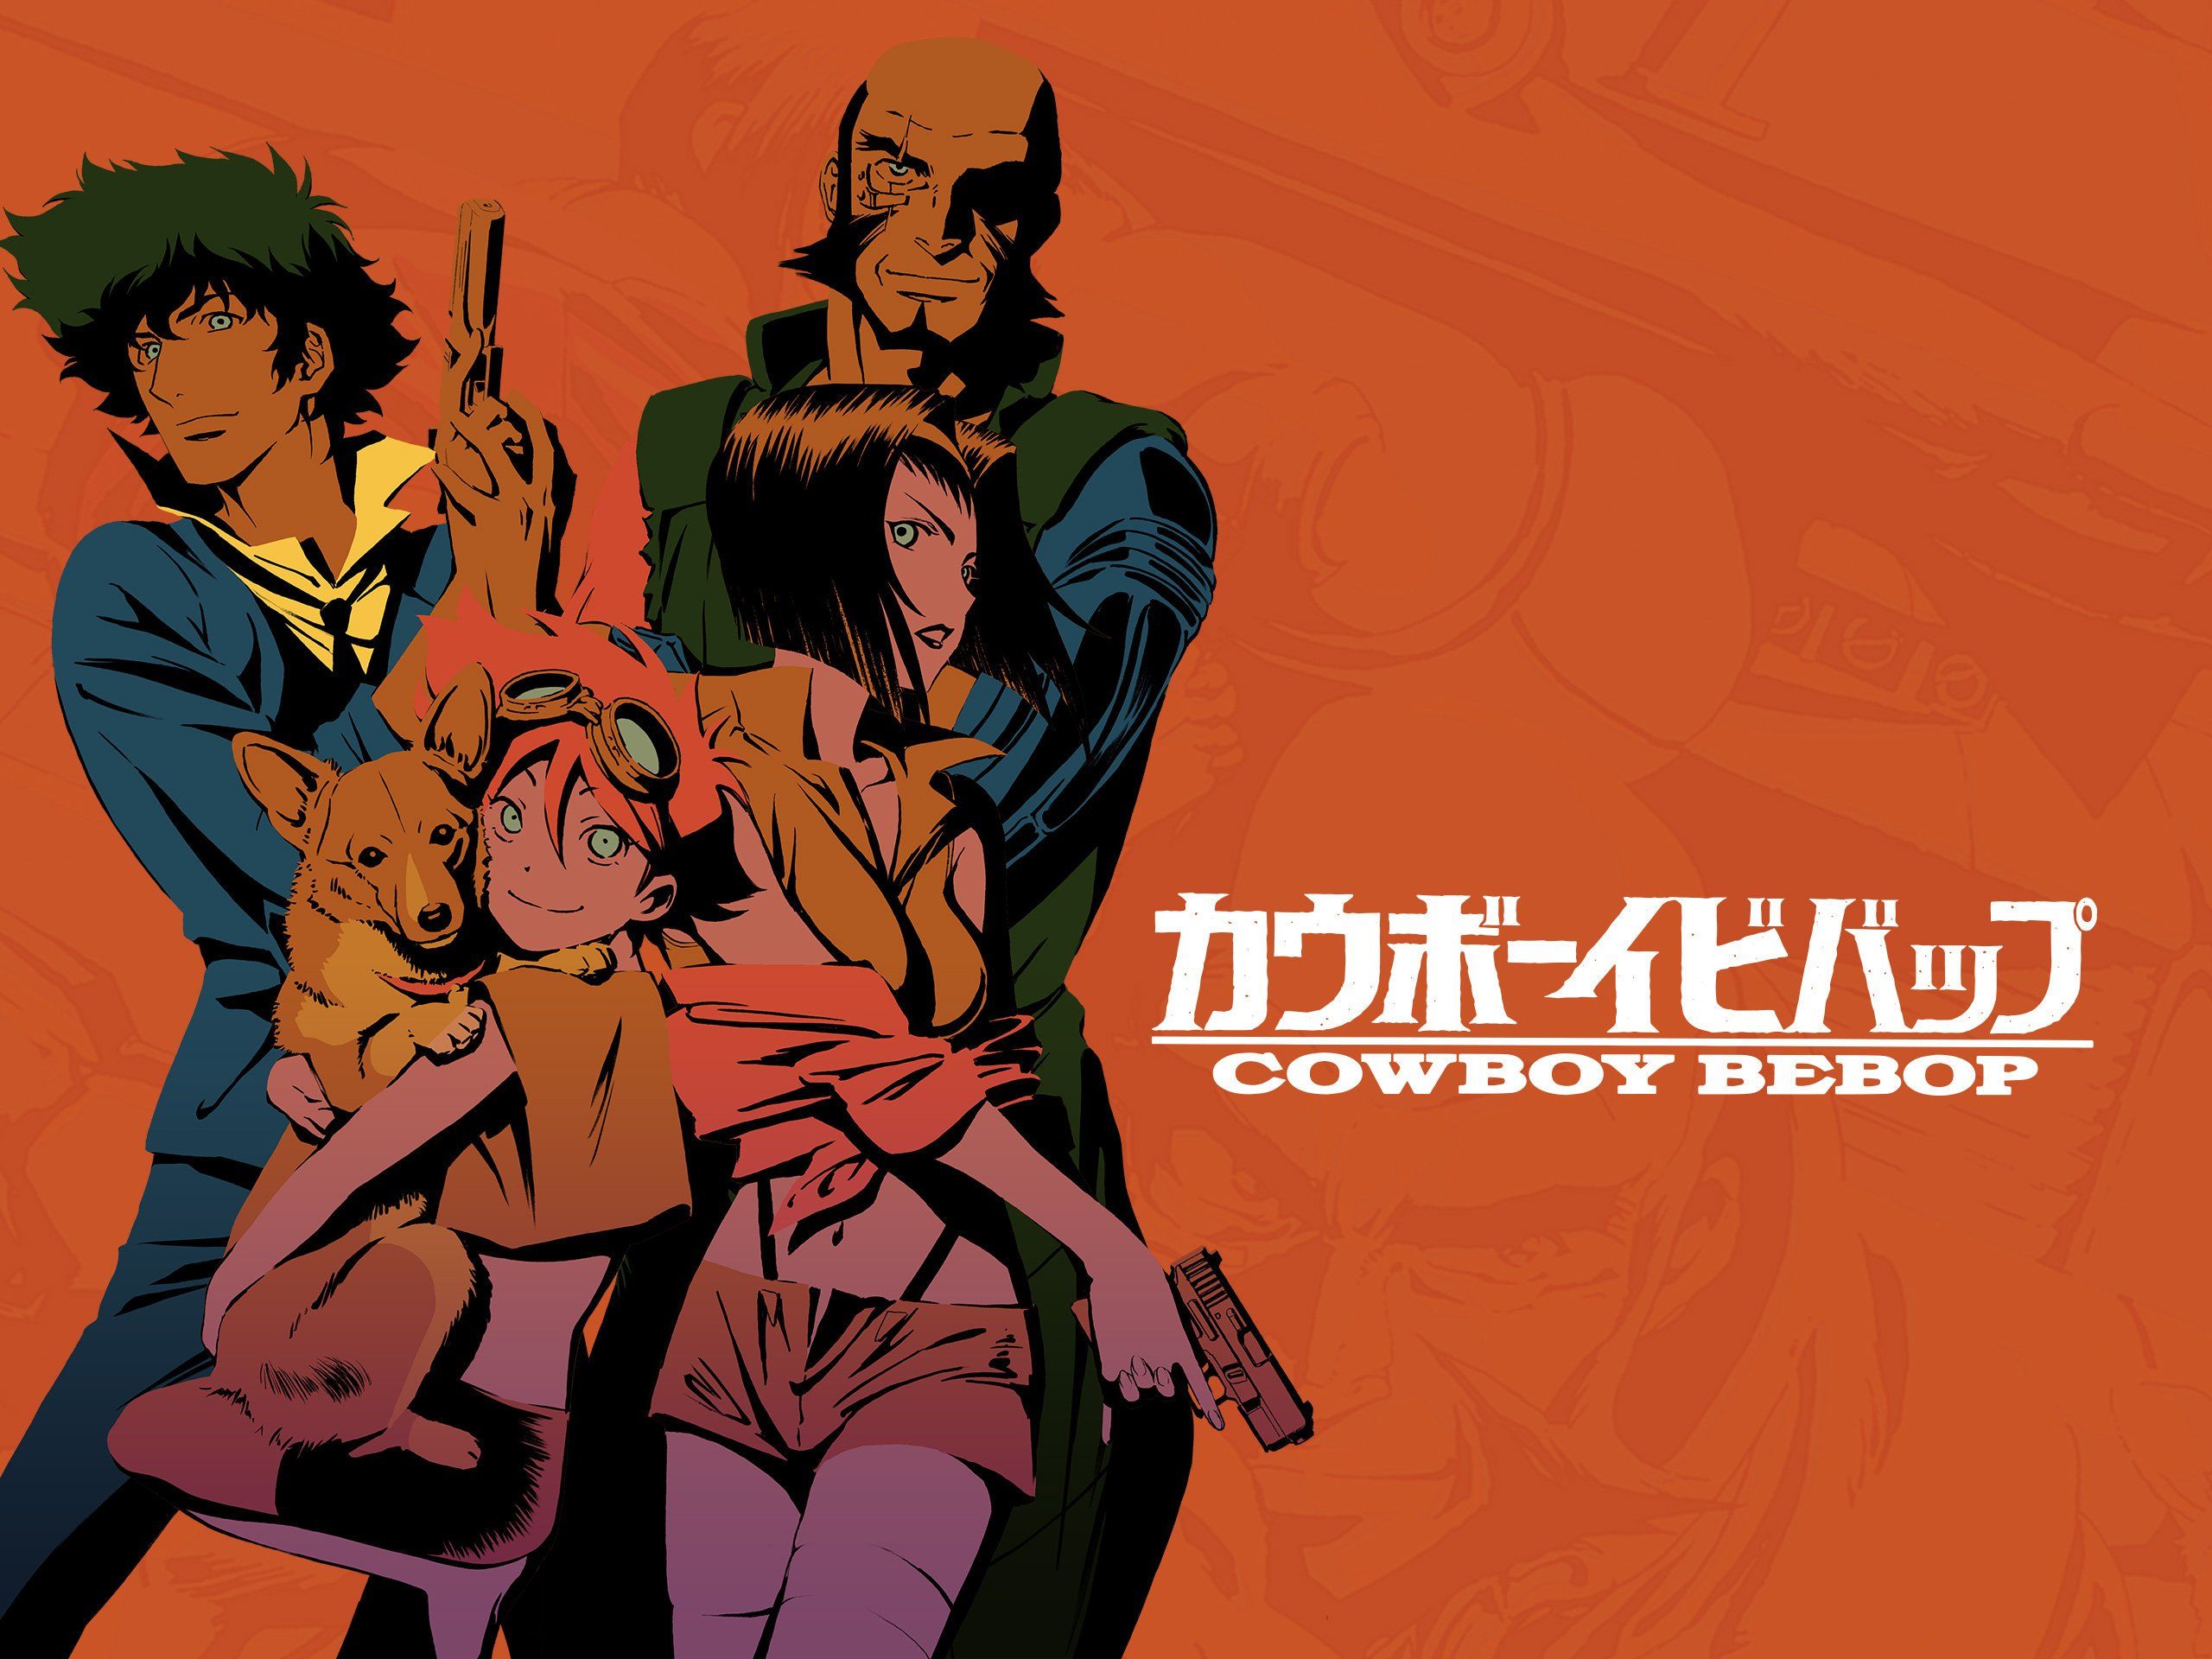 Anime Cowboy 2 by taggedzi on DeviantArt-demhanvico.com.vn